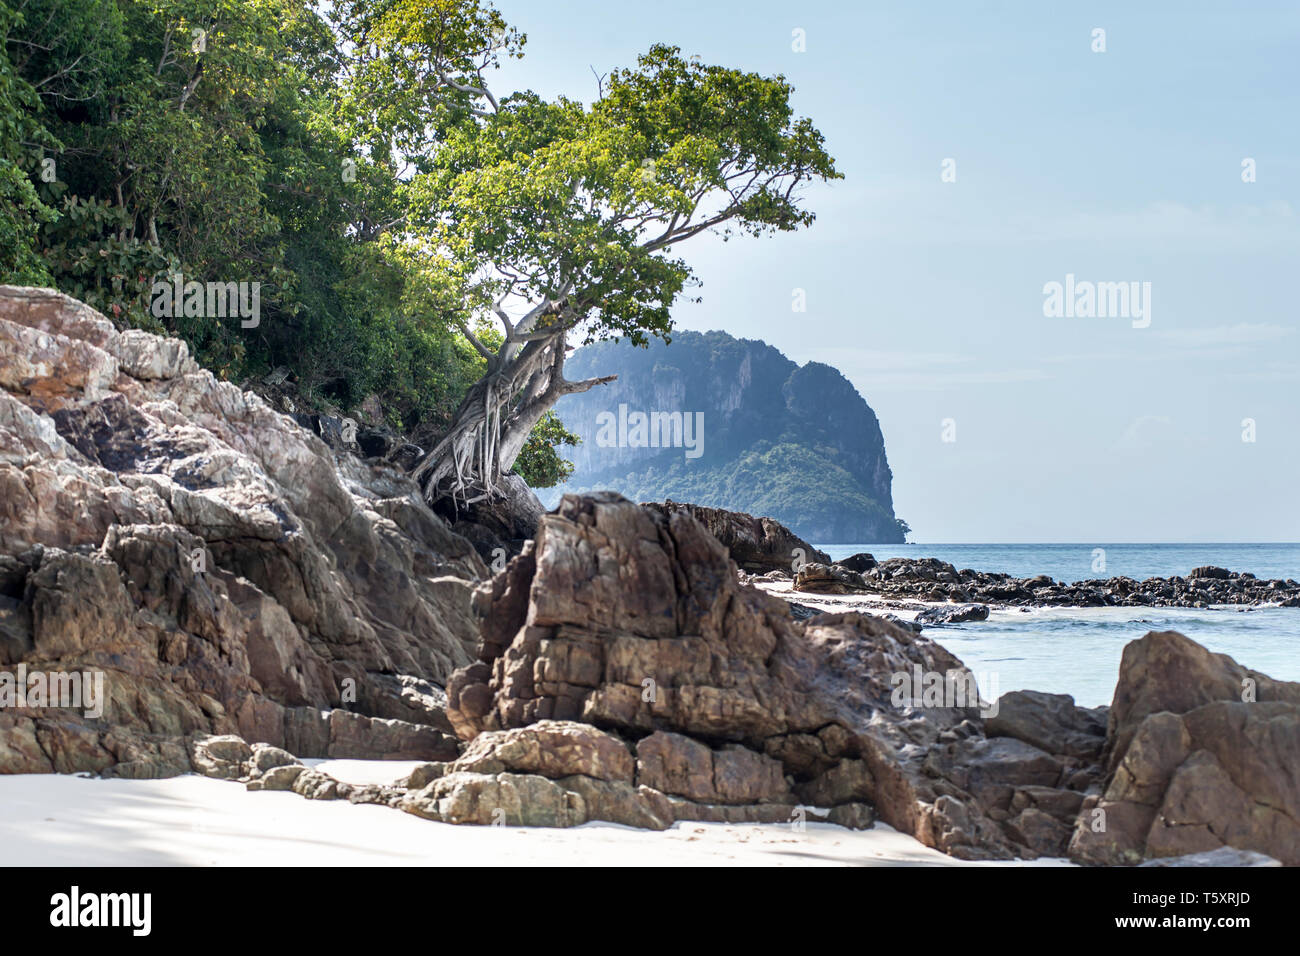 The bamboo beach in the nature reserve of Ko Mai Phai island Stock Photo